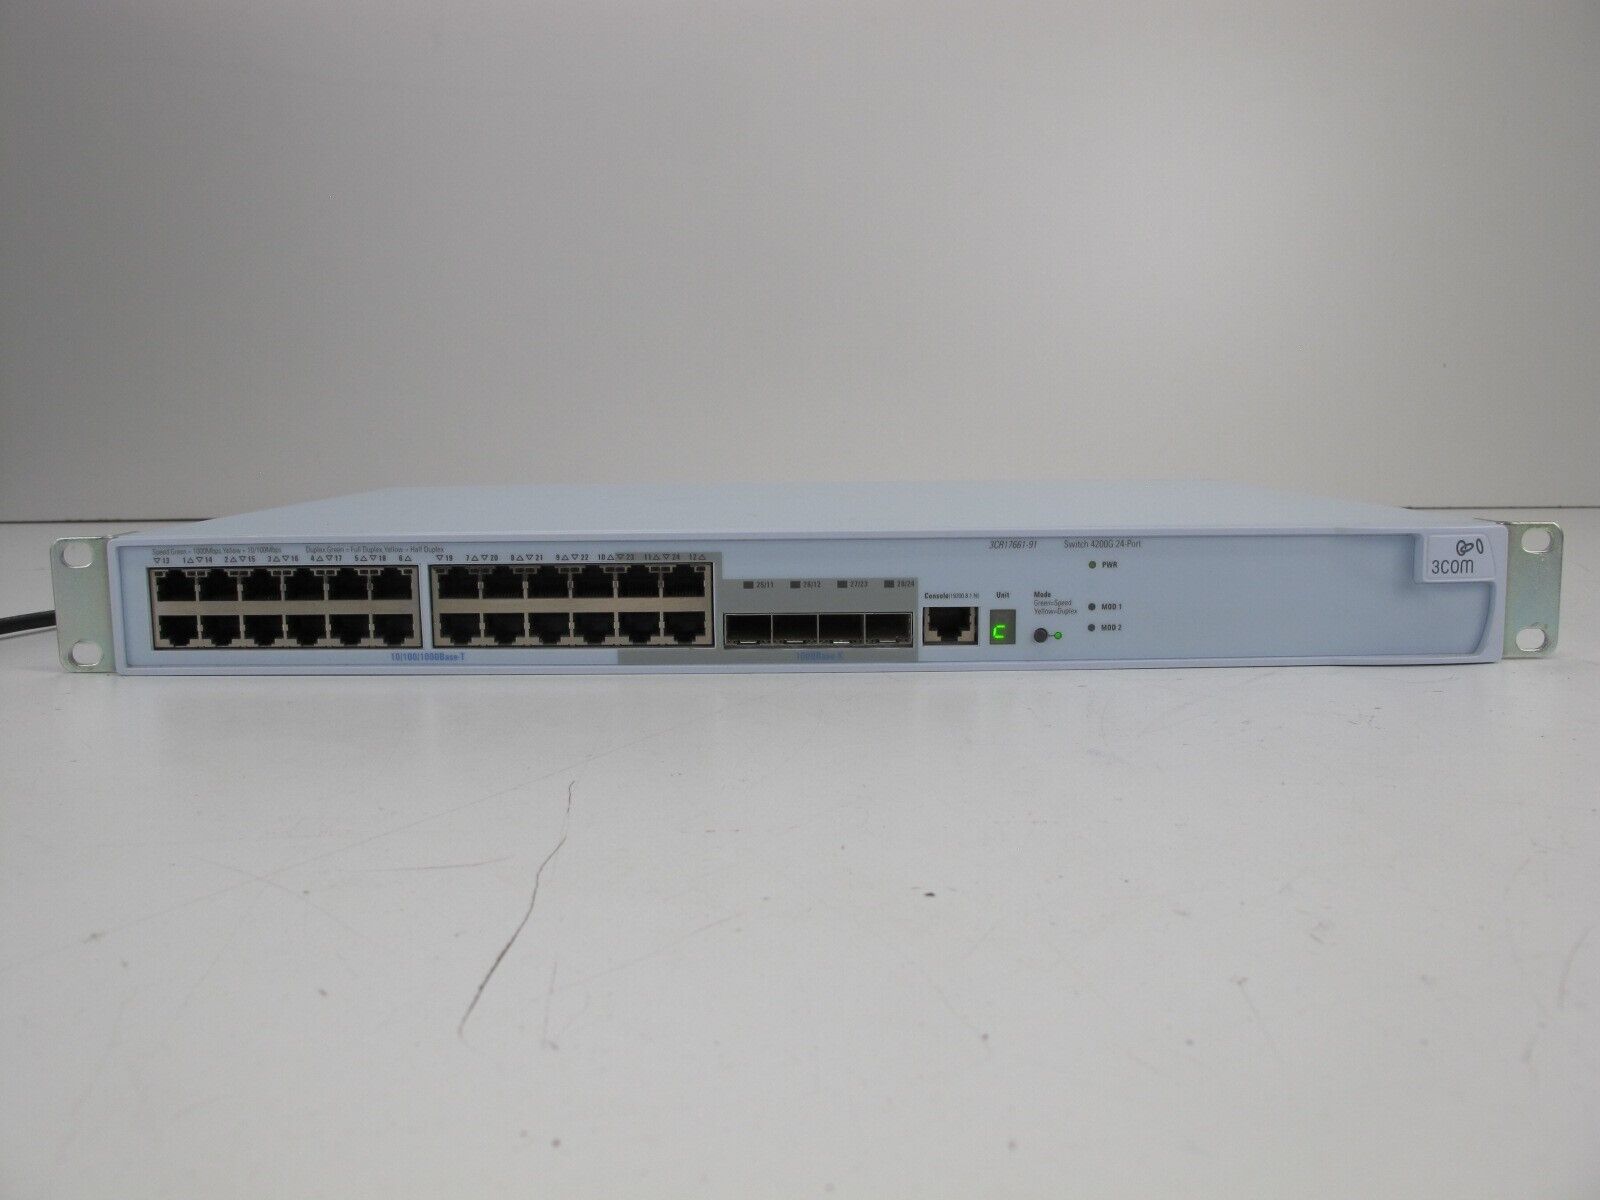 3Com Managed Network Switch 4200G 24-Port 3CR17661-91